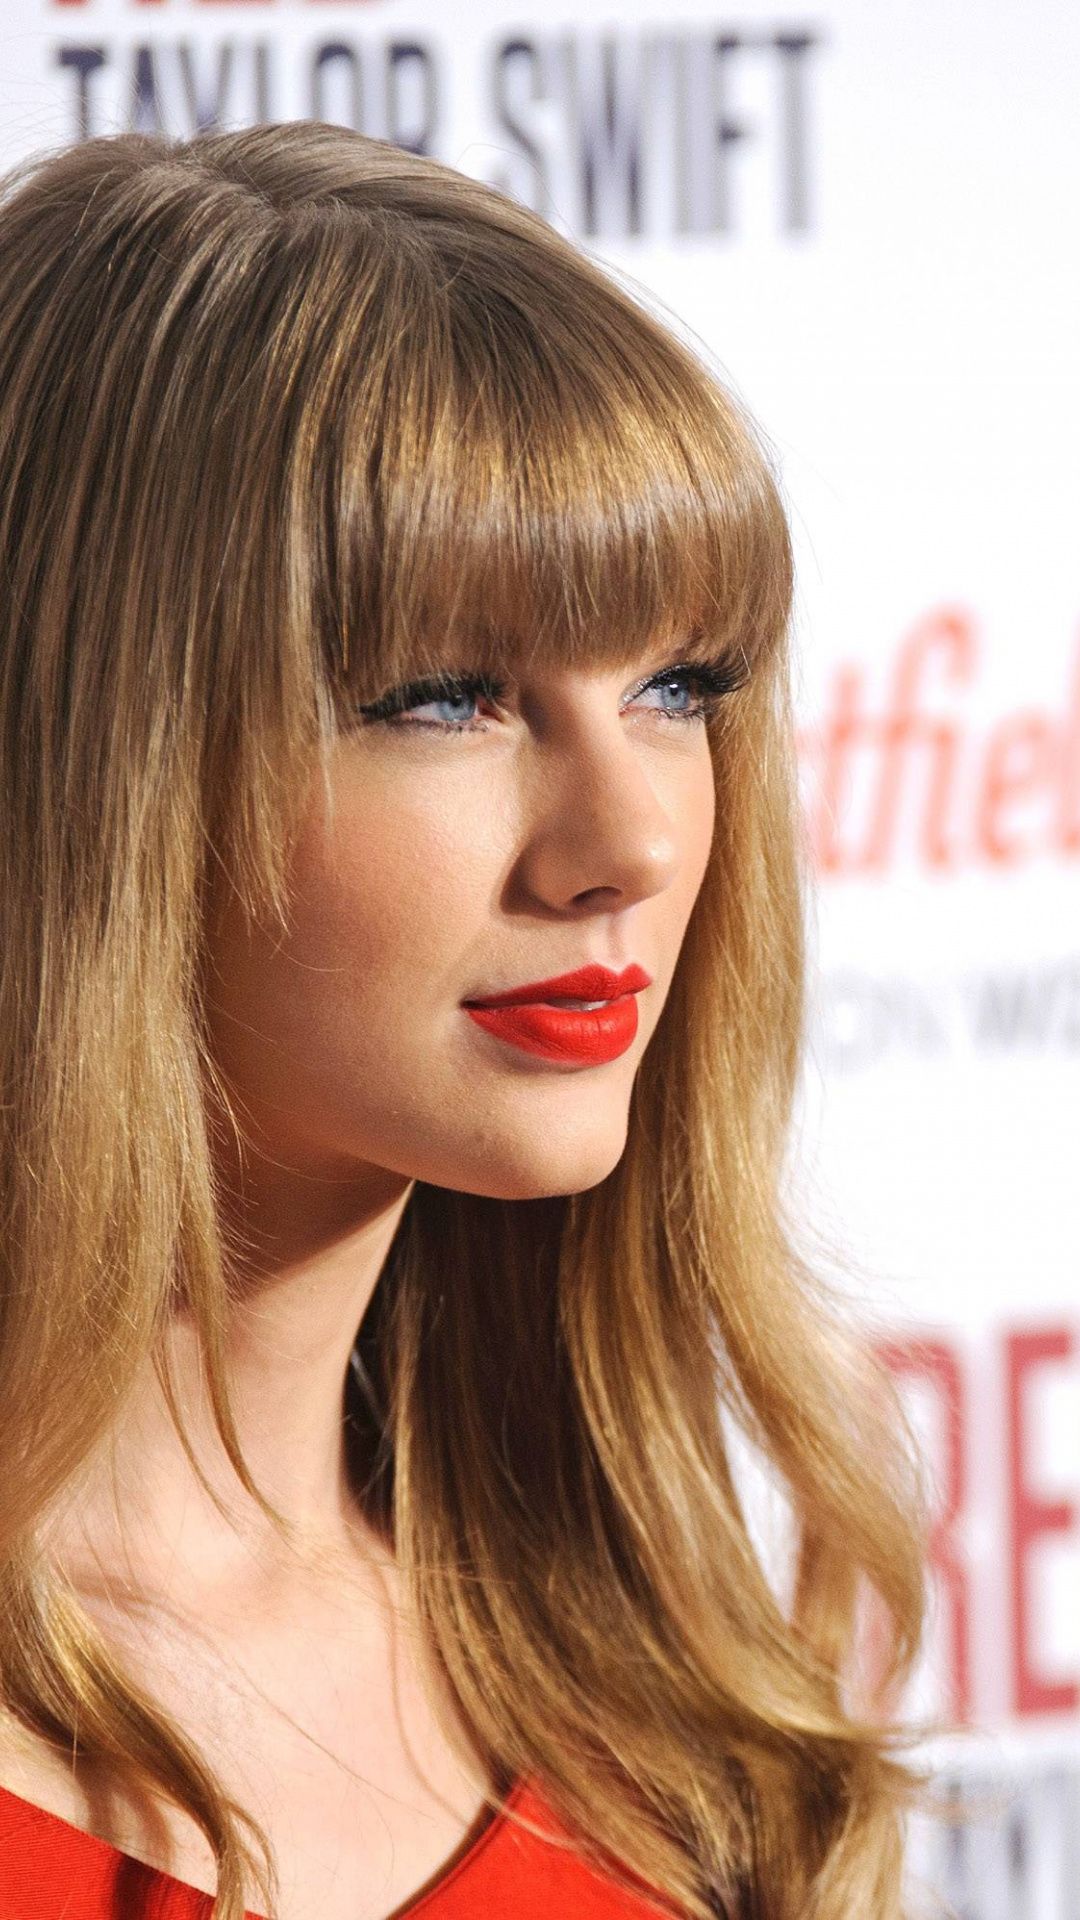 Gorgeous Singer Red Lips Taylor Swift Wallpaper Celebrity